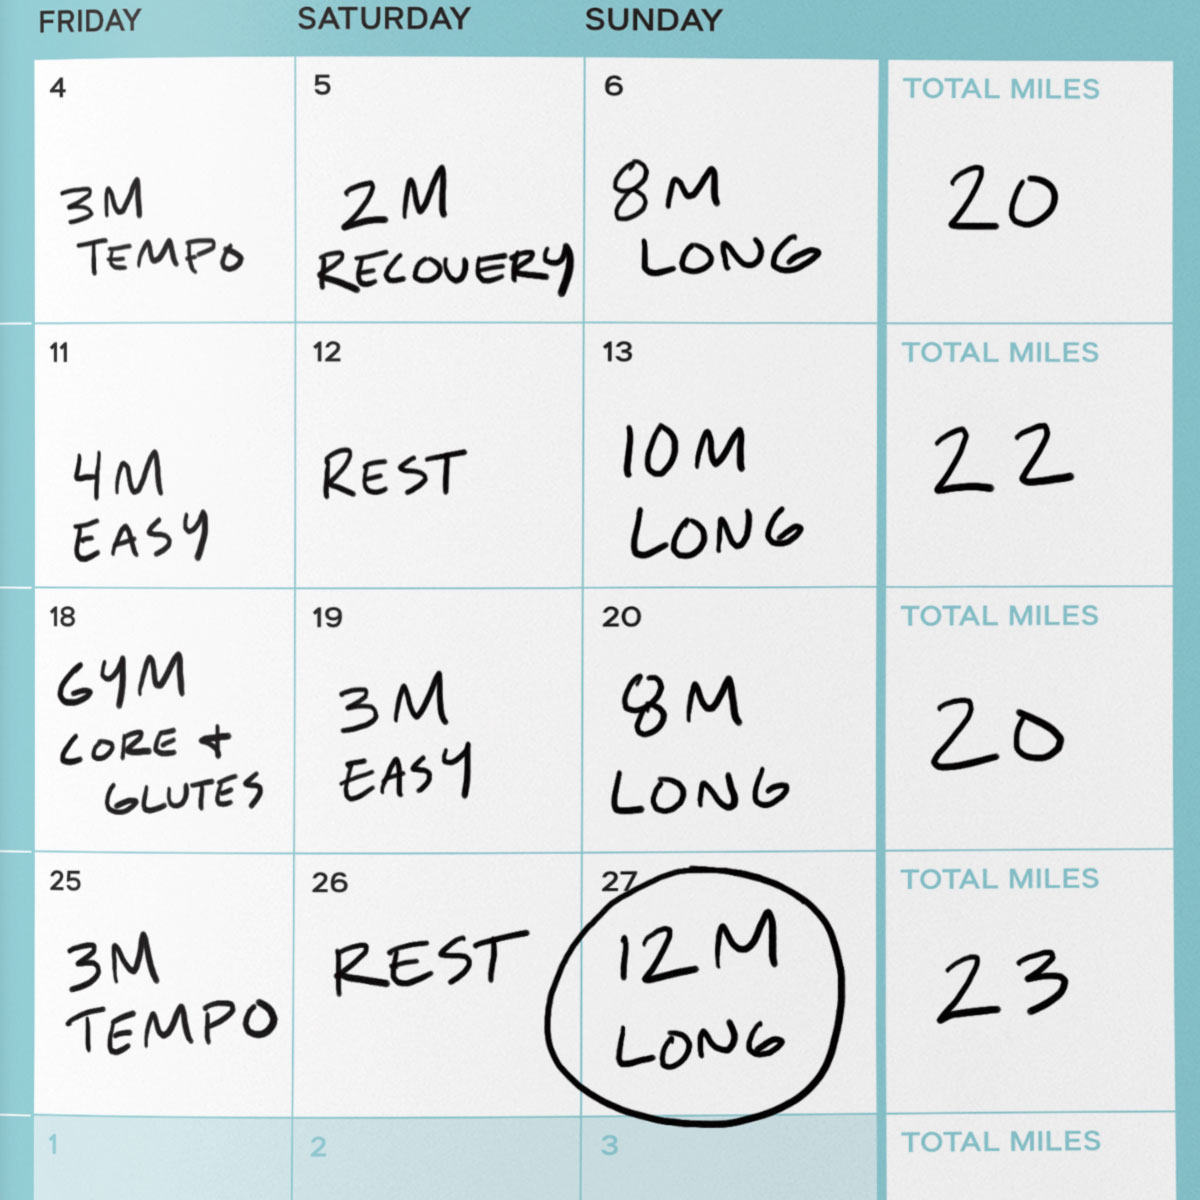 Running schedule written in the monthly calendar